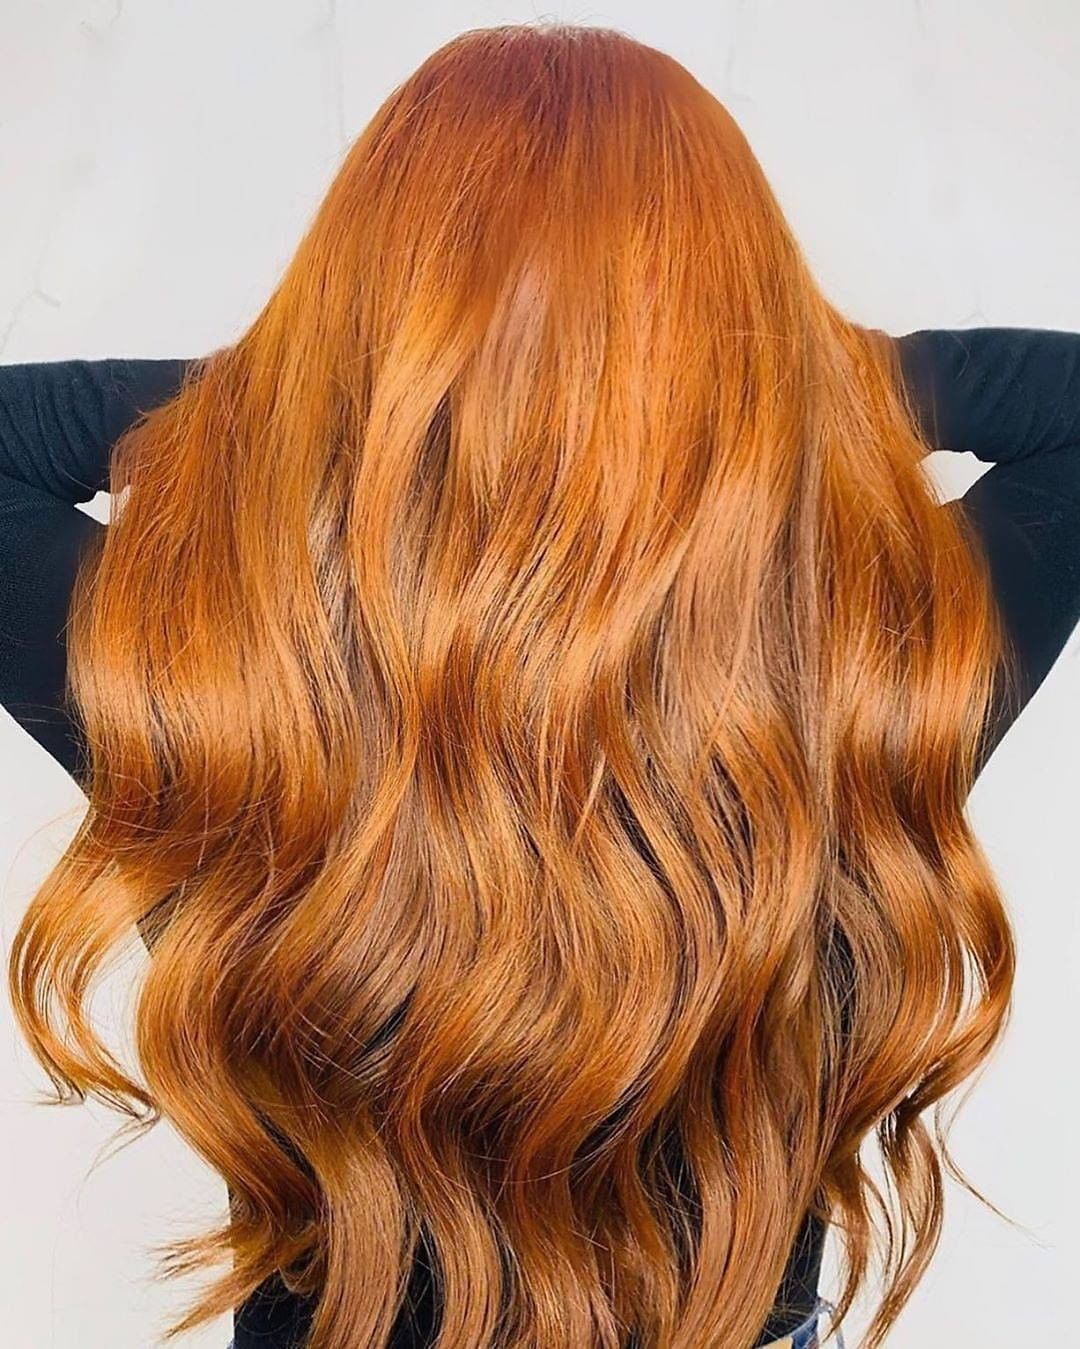 Schwarzkopf Professional - Turn up the HEAT 🔥
*Formula* 👉 @madina_sayp creating those fiery tones with #IGORAROYAL in 7-77 with 6%.
#IGORA  #redhair #copperhair #haircolour #hairartist #hairinspo #sha...